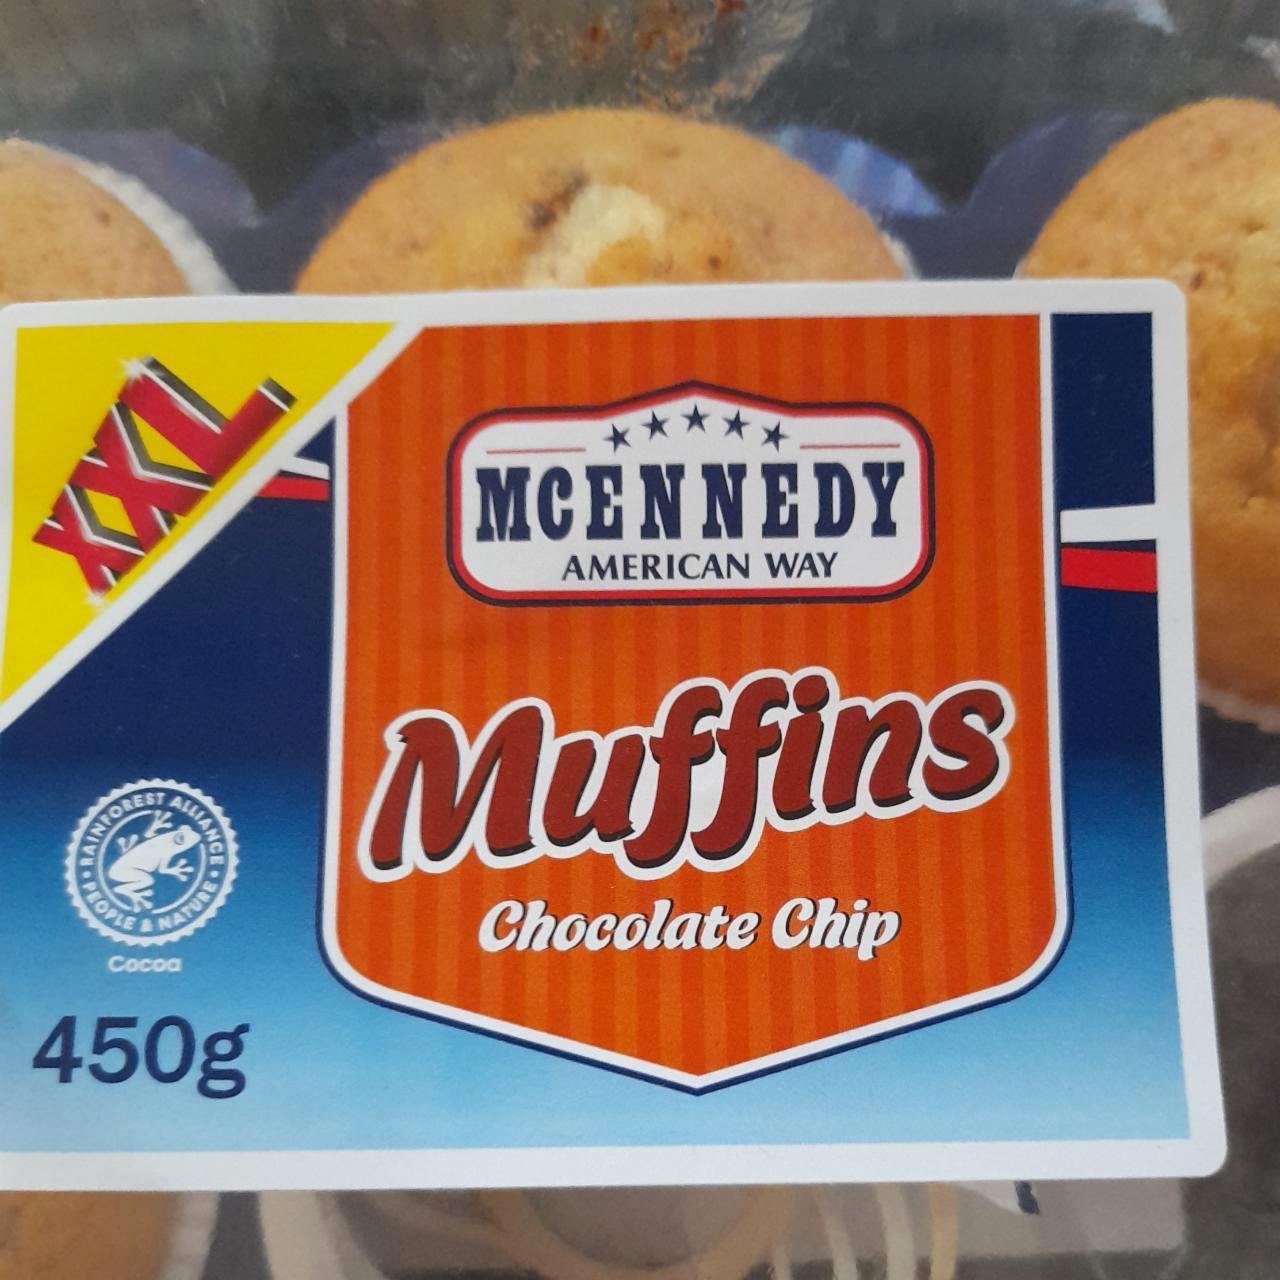 Muffins chocolate kJ American és chip kalória, - tápértékek way Mcennedy